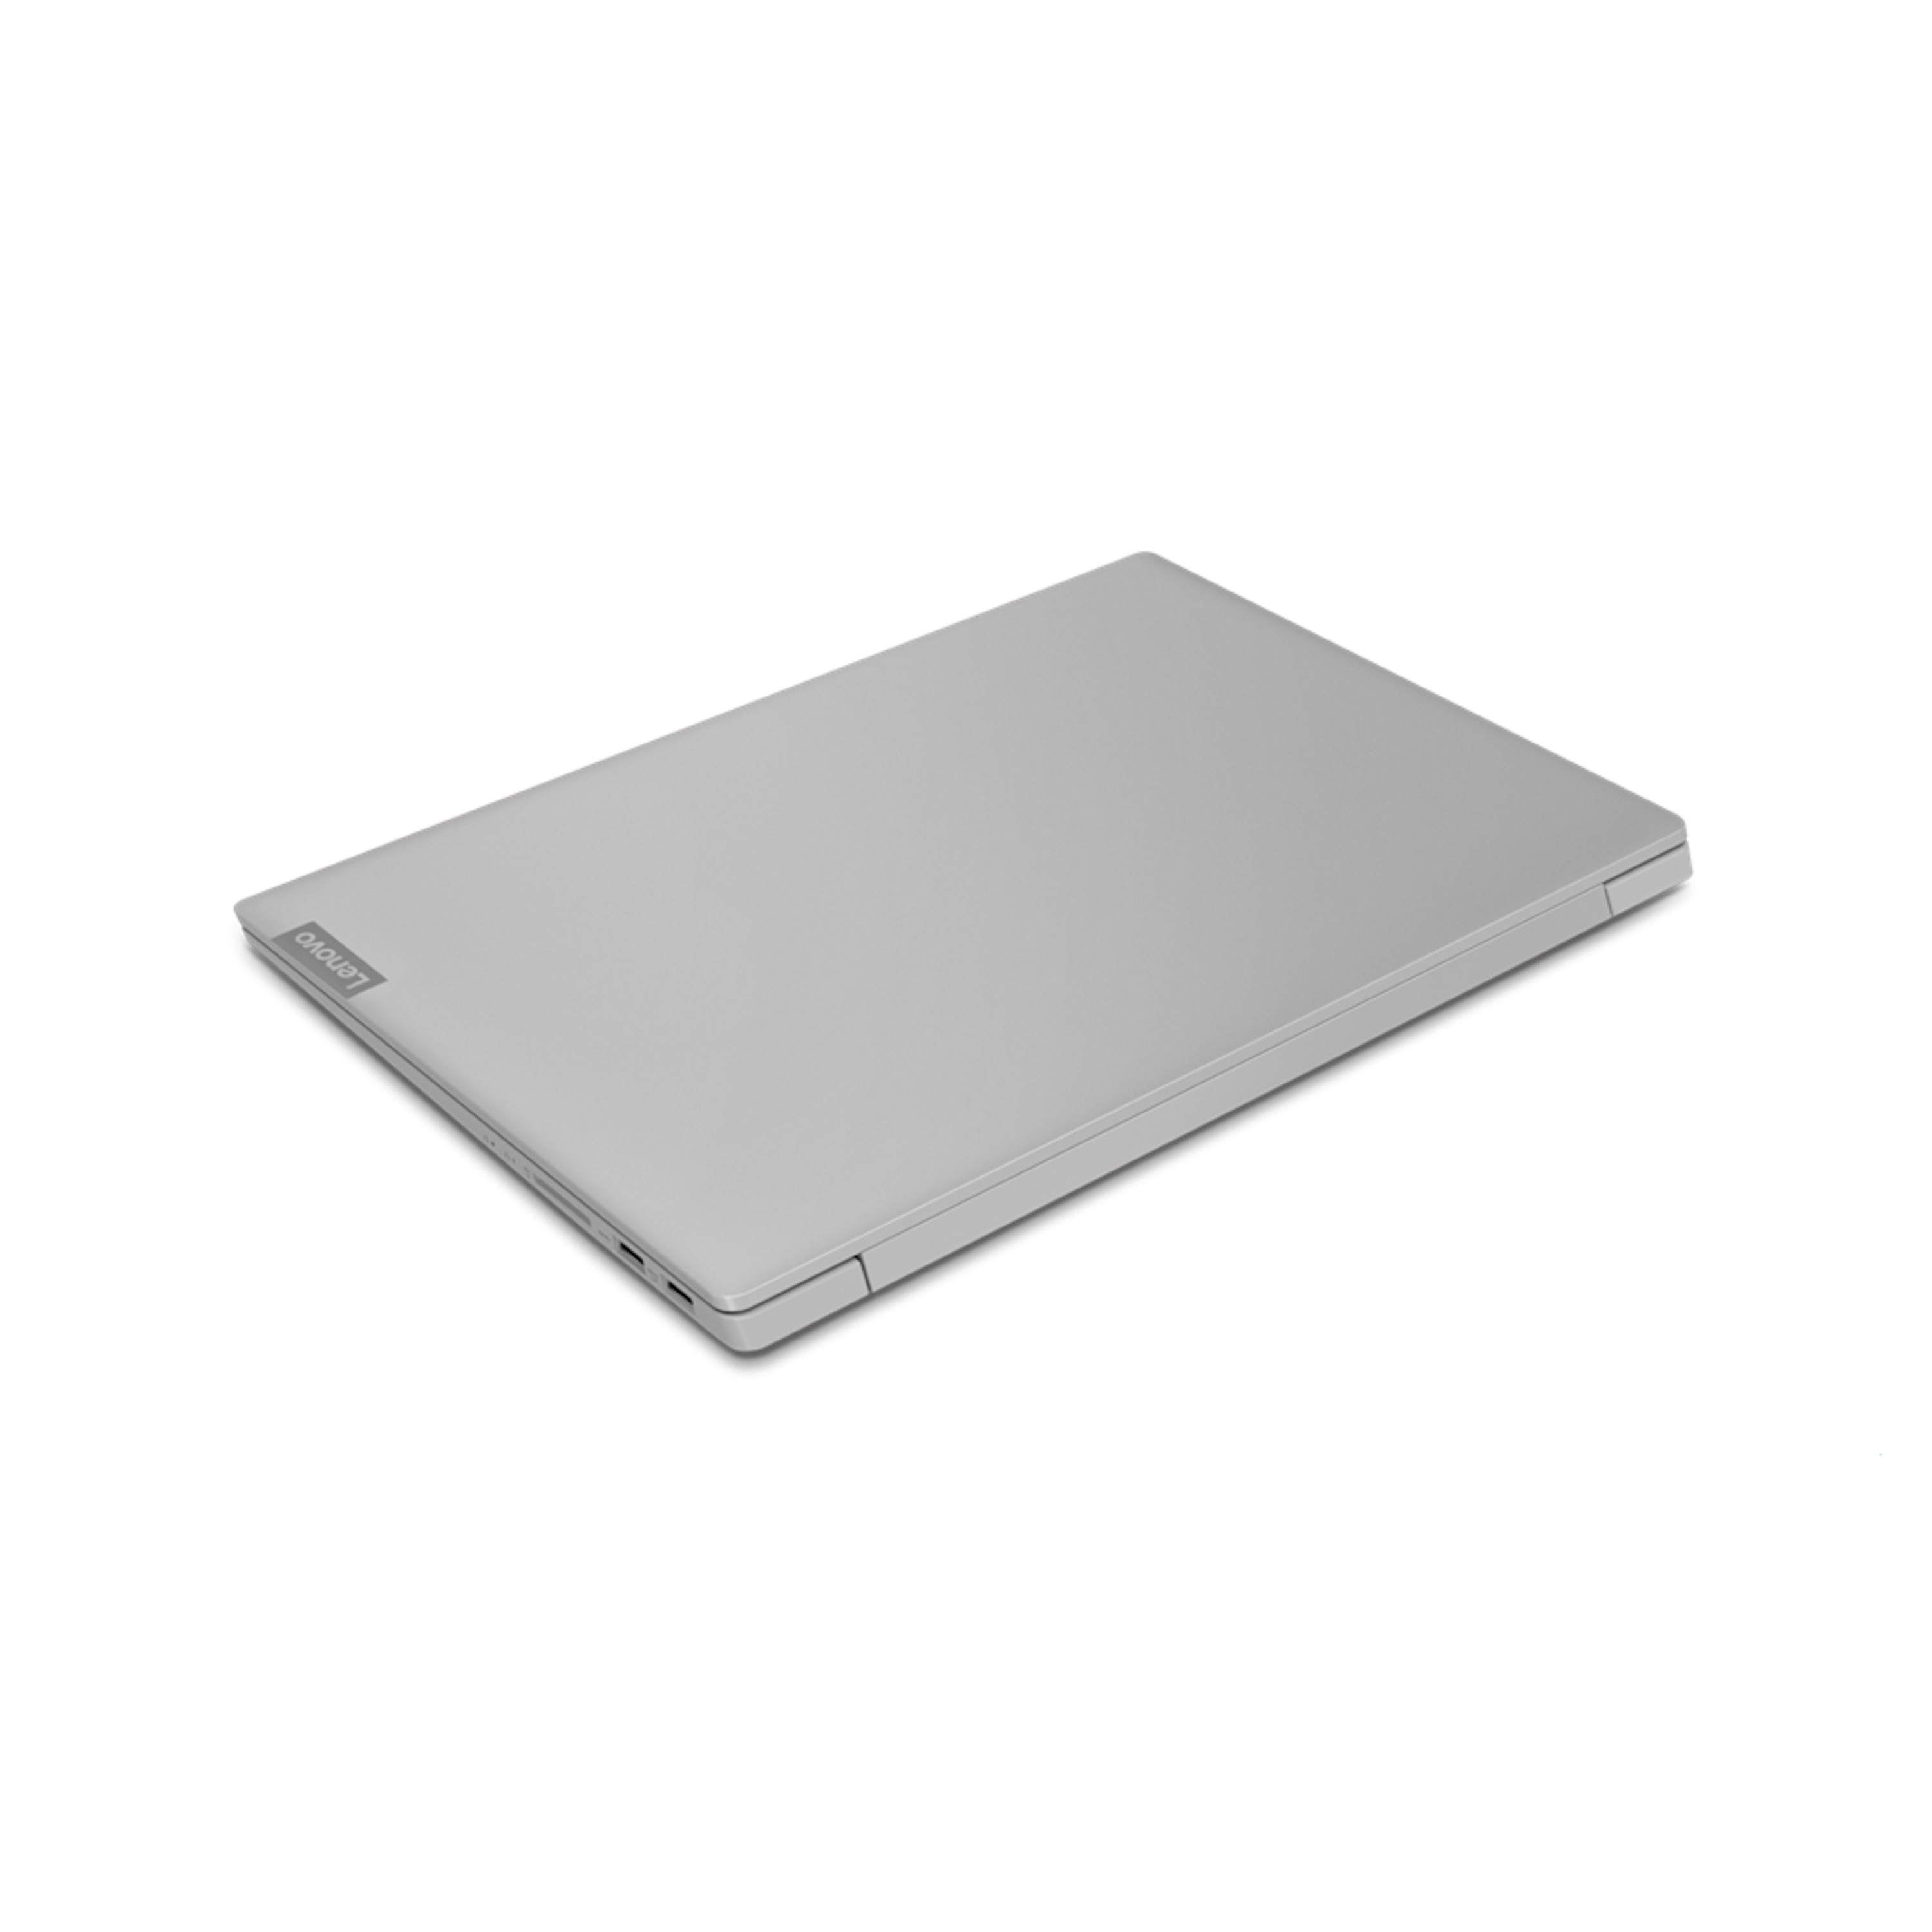 LENOVO IdeaPad™ S340-15IIL, Intel® Core™ i7-10510U, Windows 10 Home, 39,6 cm (15,6") FHD Display, MX230, 512 GB PCIe SSD, 8 GB RAM, Notebook (B-Ware)